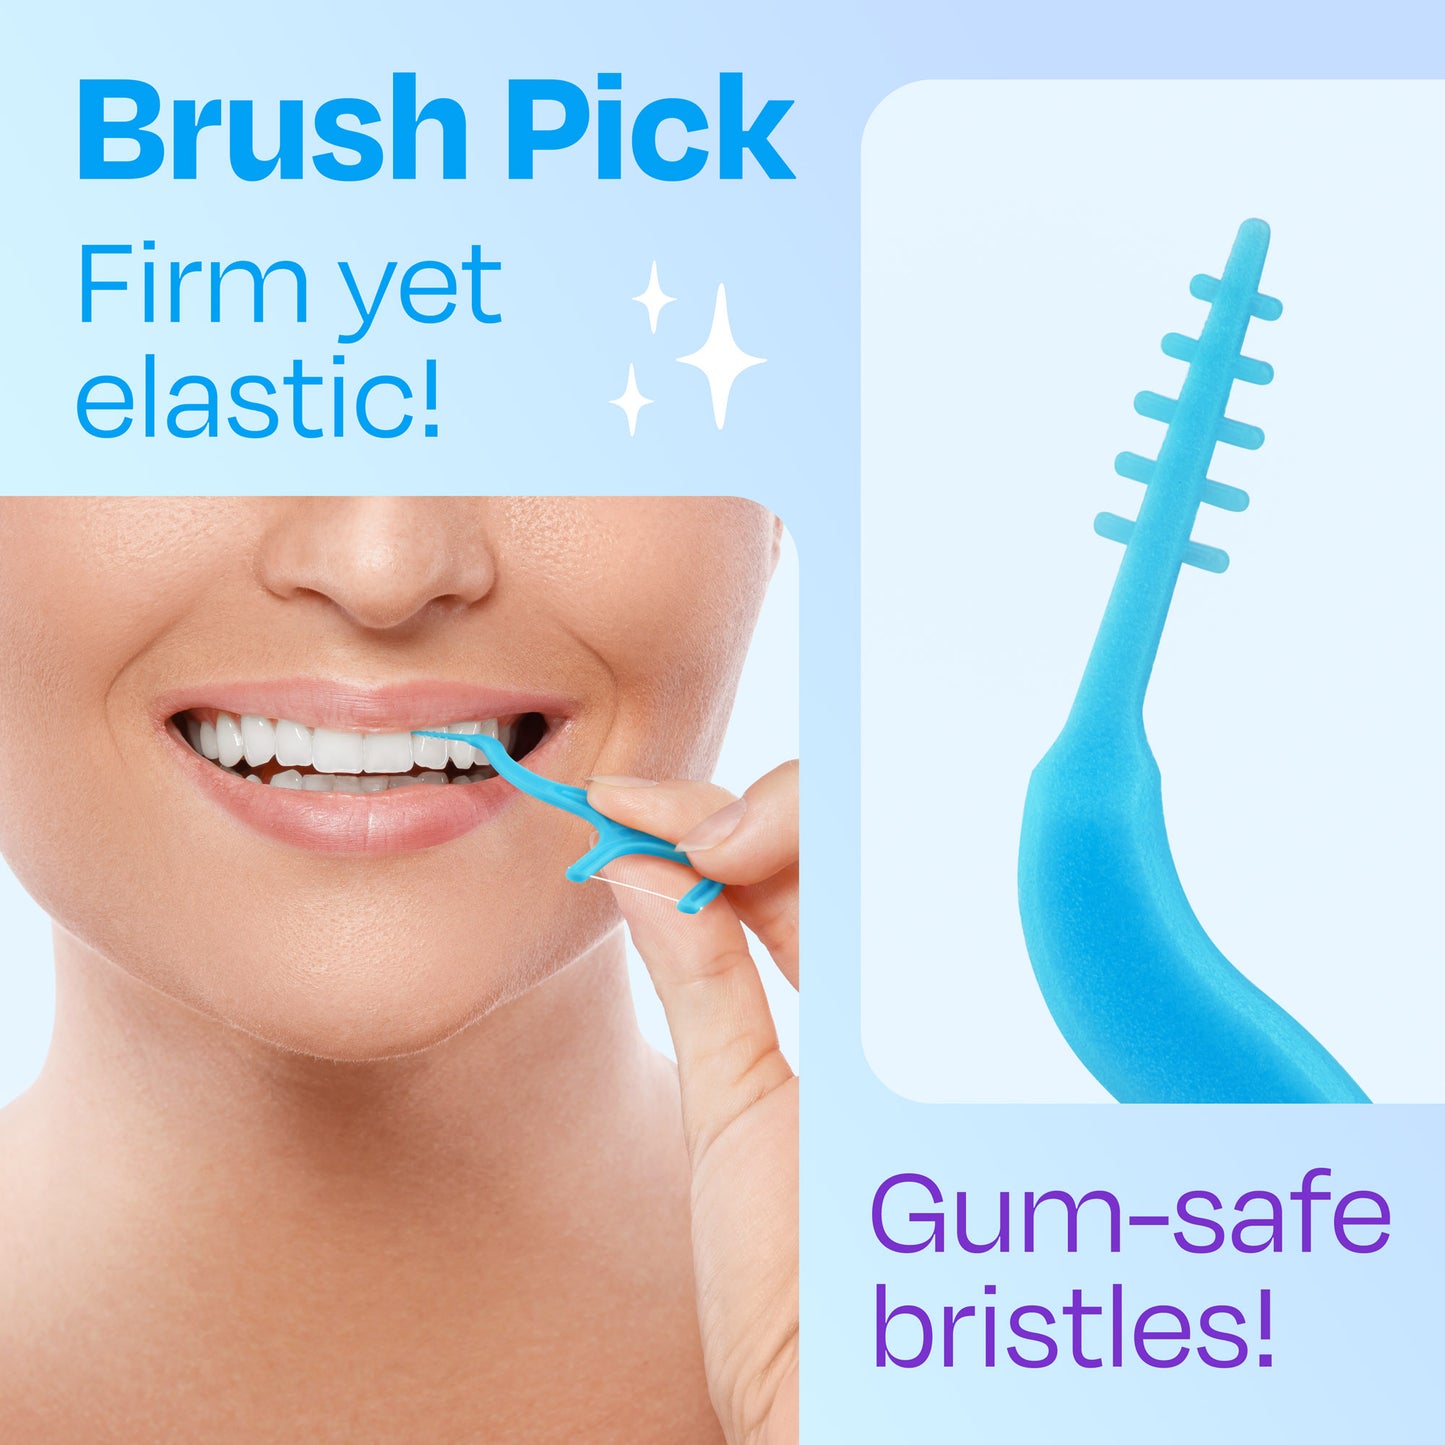 Trueocity Dental Flossers Brush Picks 4 Pack w/ Travel Case (200 Total Count), Dental Floss Glides Easy Between Teeth, Flosser Helps Prevent Tooth Decay & Gum Disease, Easy Grip Handle, Mint Flavored